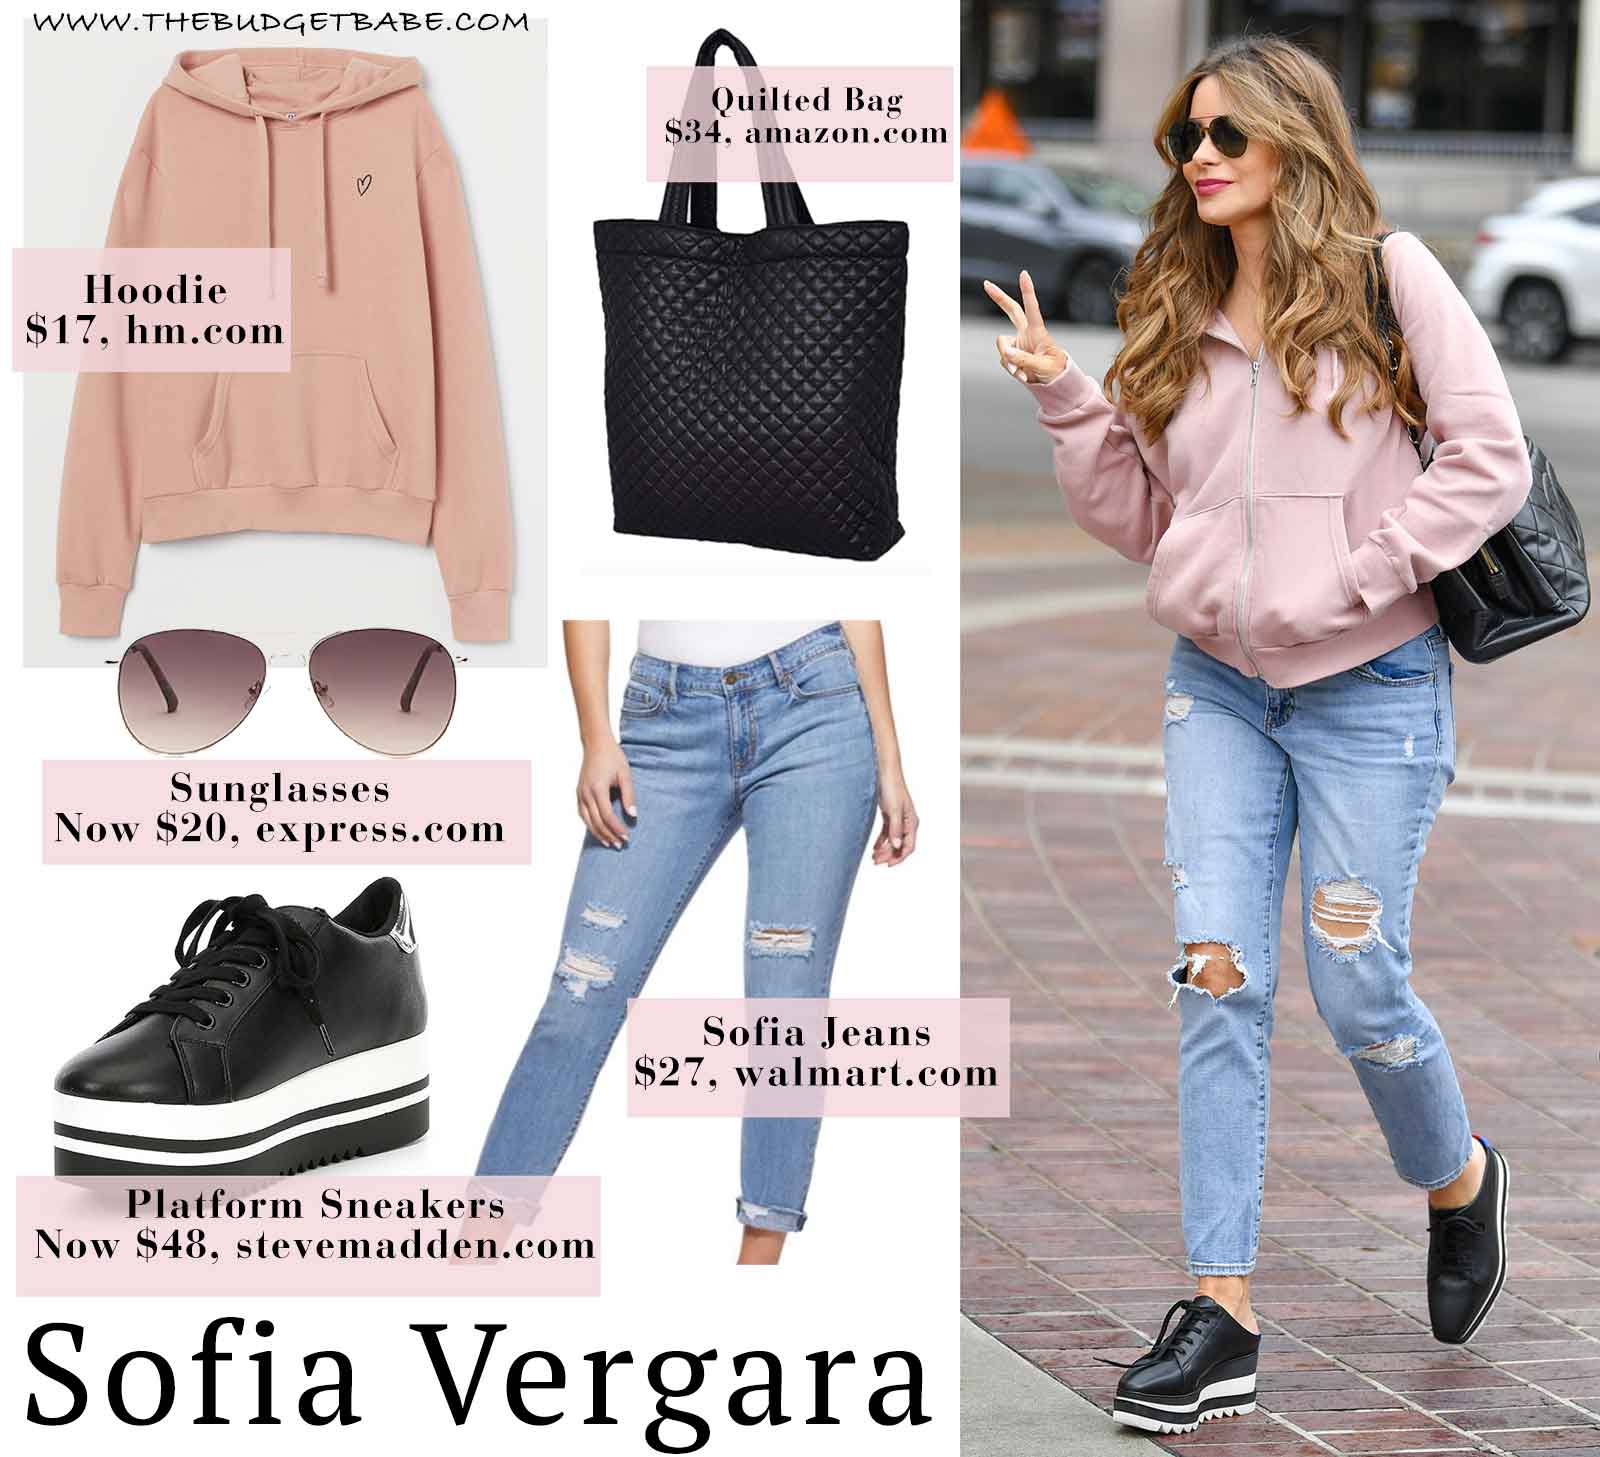 Sofia Vergara in Stella McCartney Platform Sneakers - Look for Less!